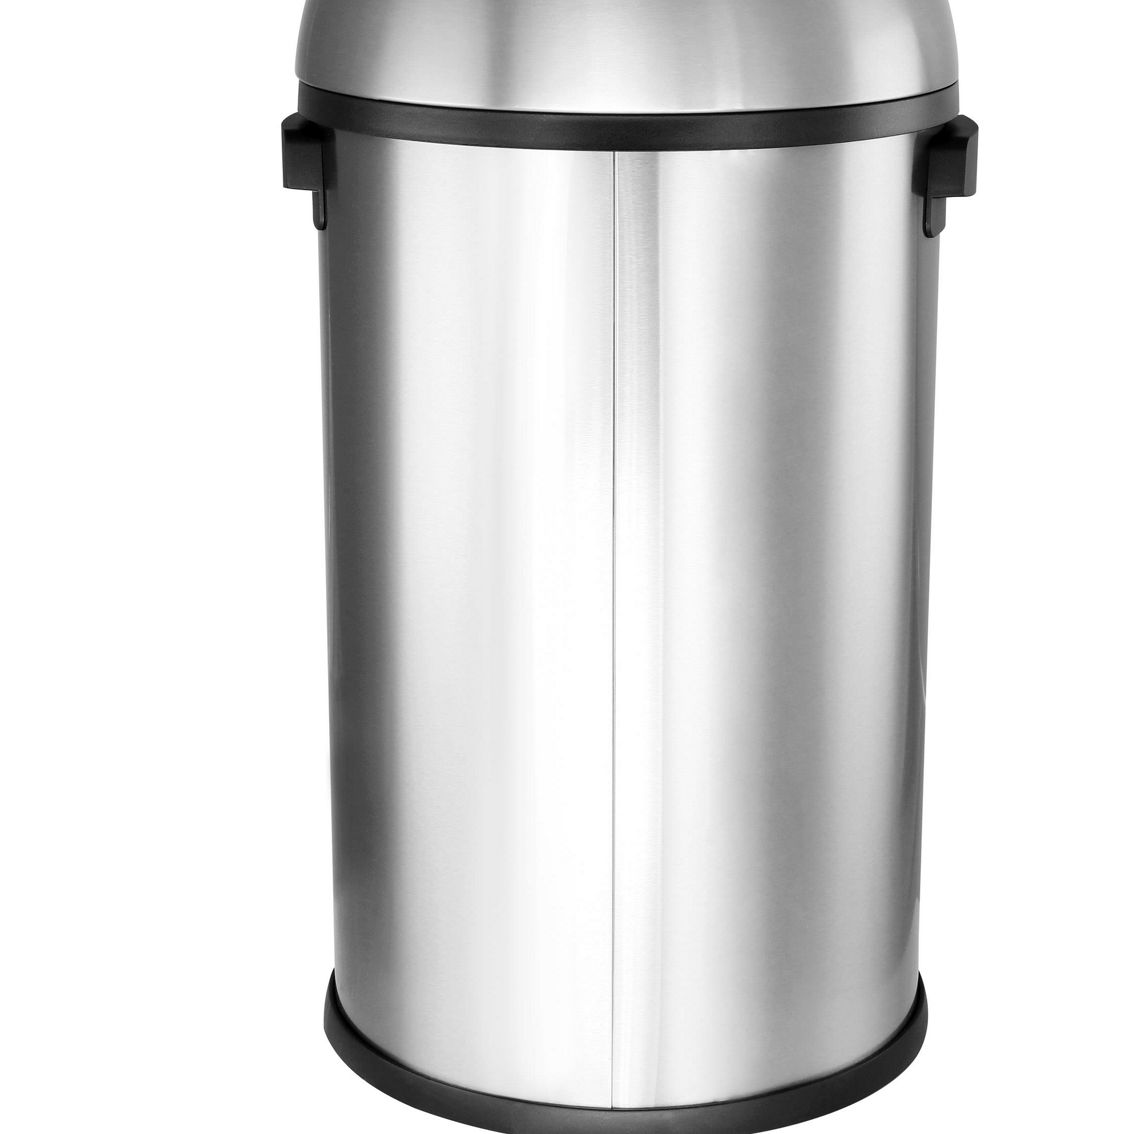 Elama 65 Liter Large 17 Gallon Swing Lid Stainless Steel Cylindrical Trash Bin - Image 2 of 5